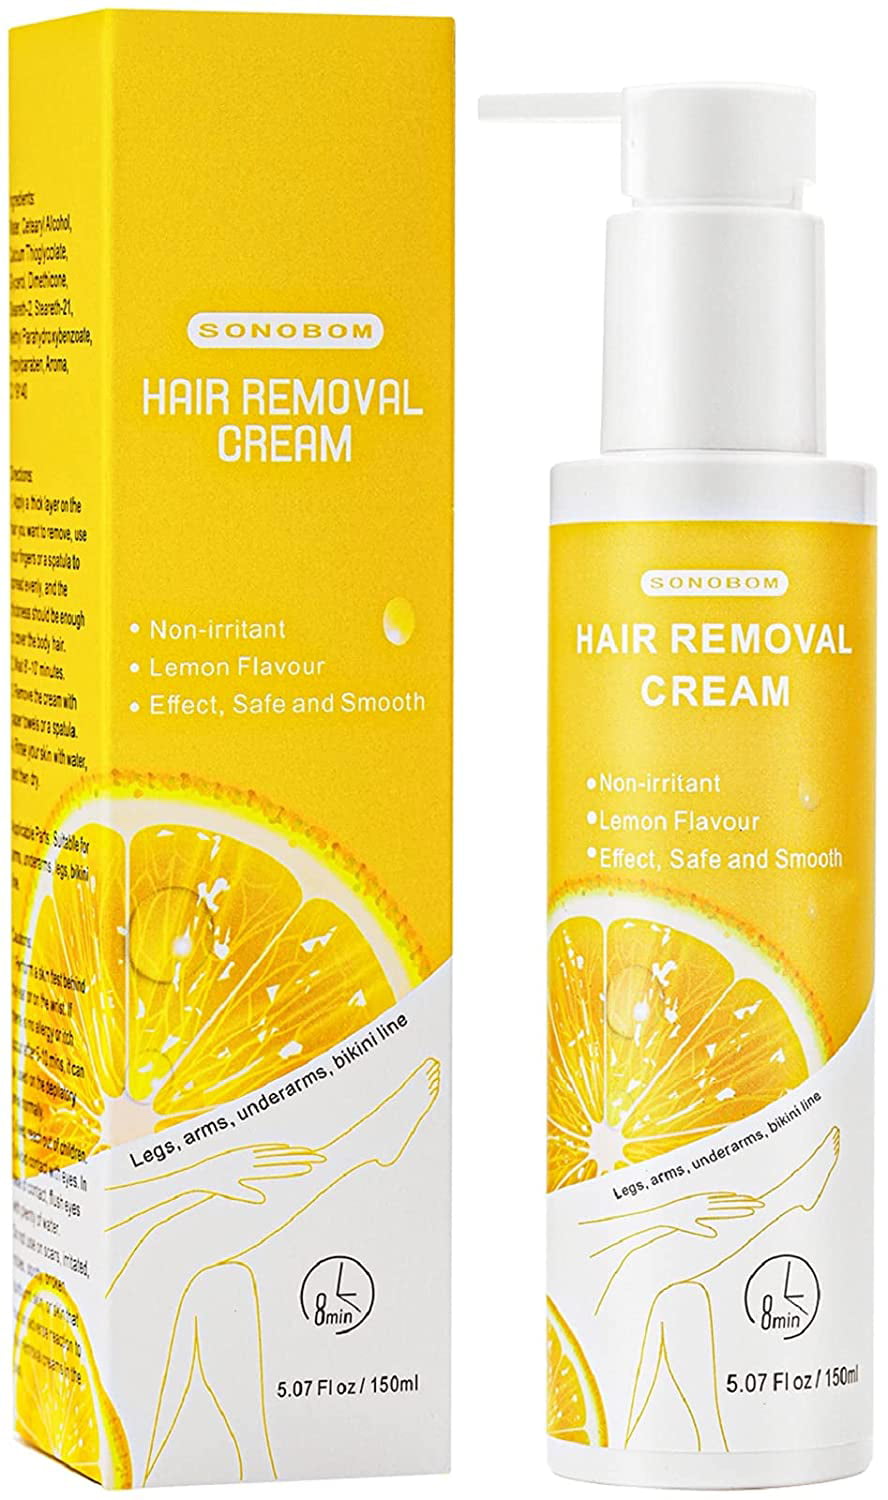 Lemon Flavor Hair Removal Cream for Women and Men, Painless Non-Irritat for  Sensitive Skin, Bikini Hair Removal Cream For Intimate Area, Arms, Legs,  Underarms, Chest,  Fl oz 